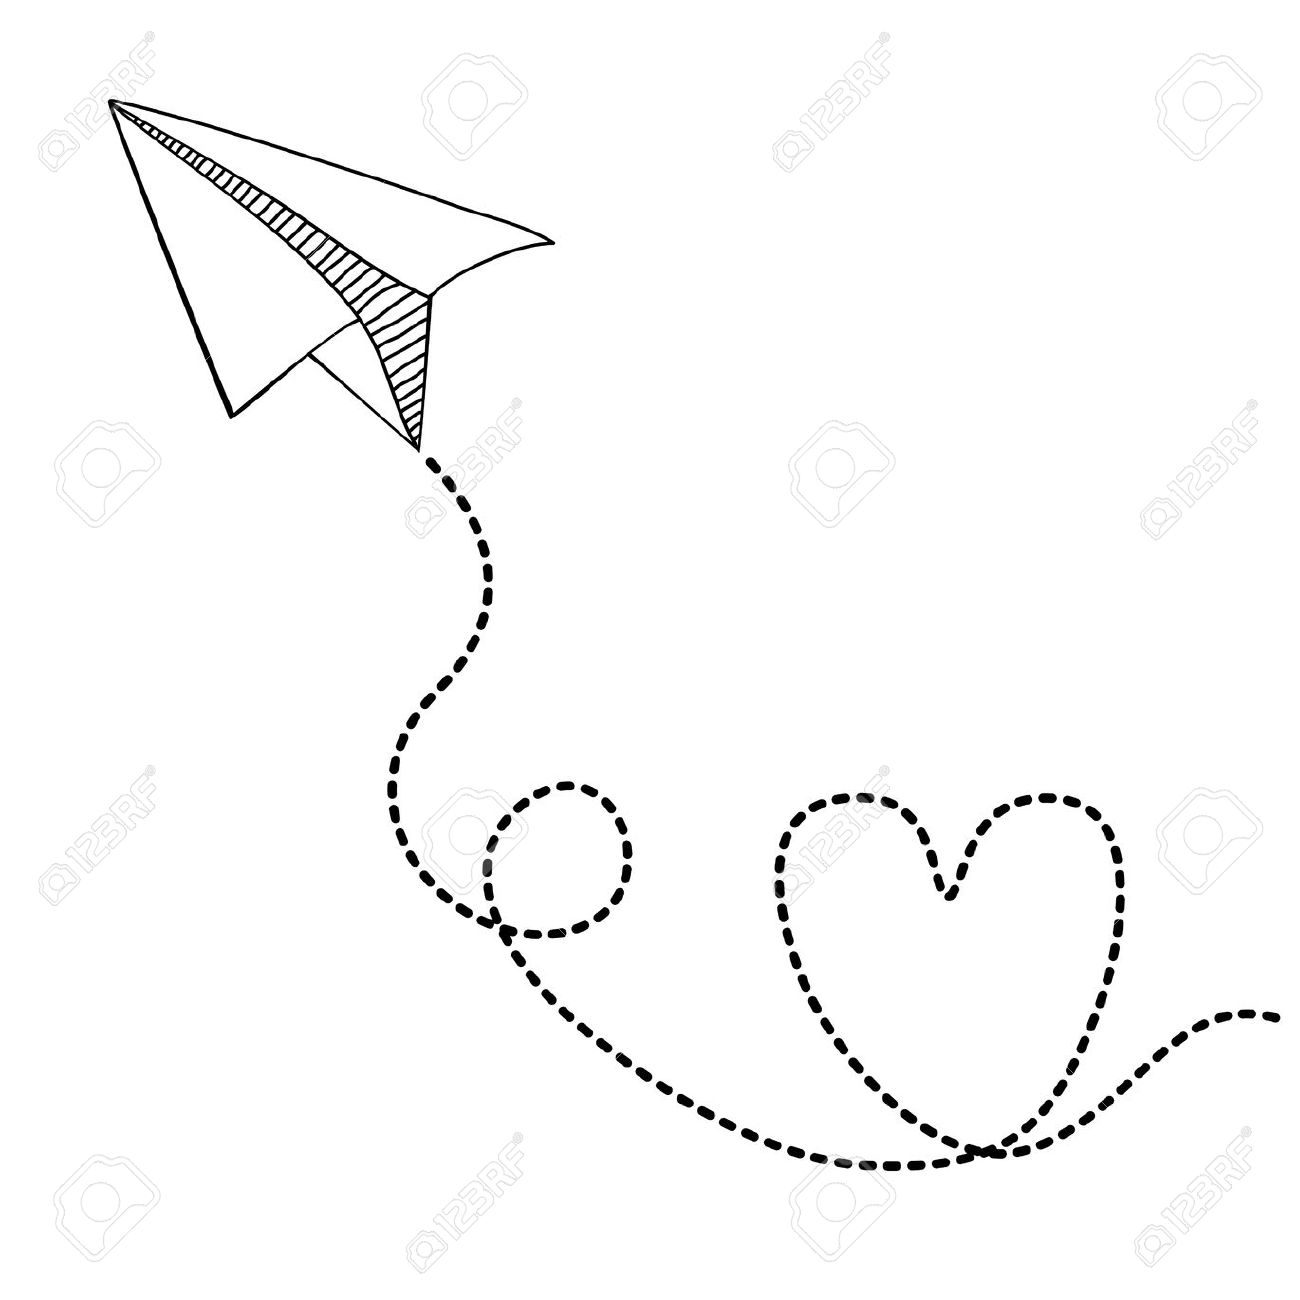 Simple Airplane Drawing at GetDrawings | Free download